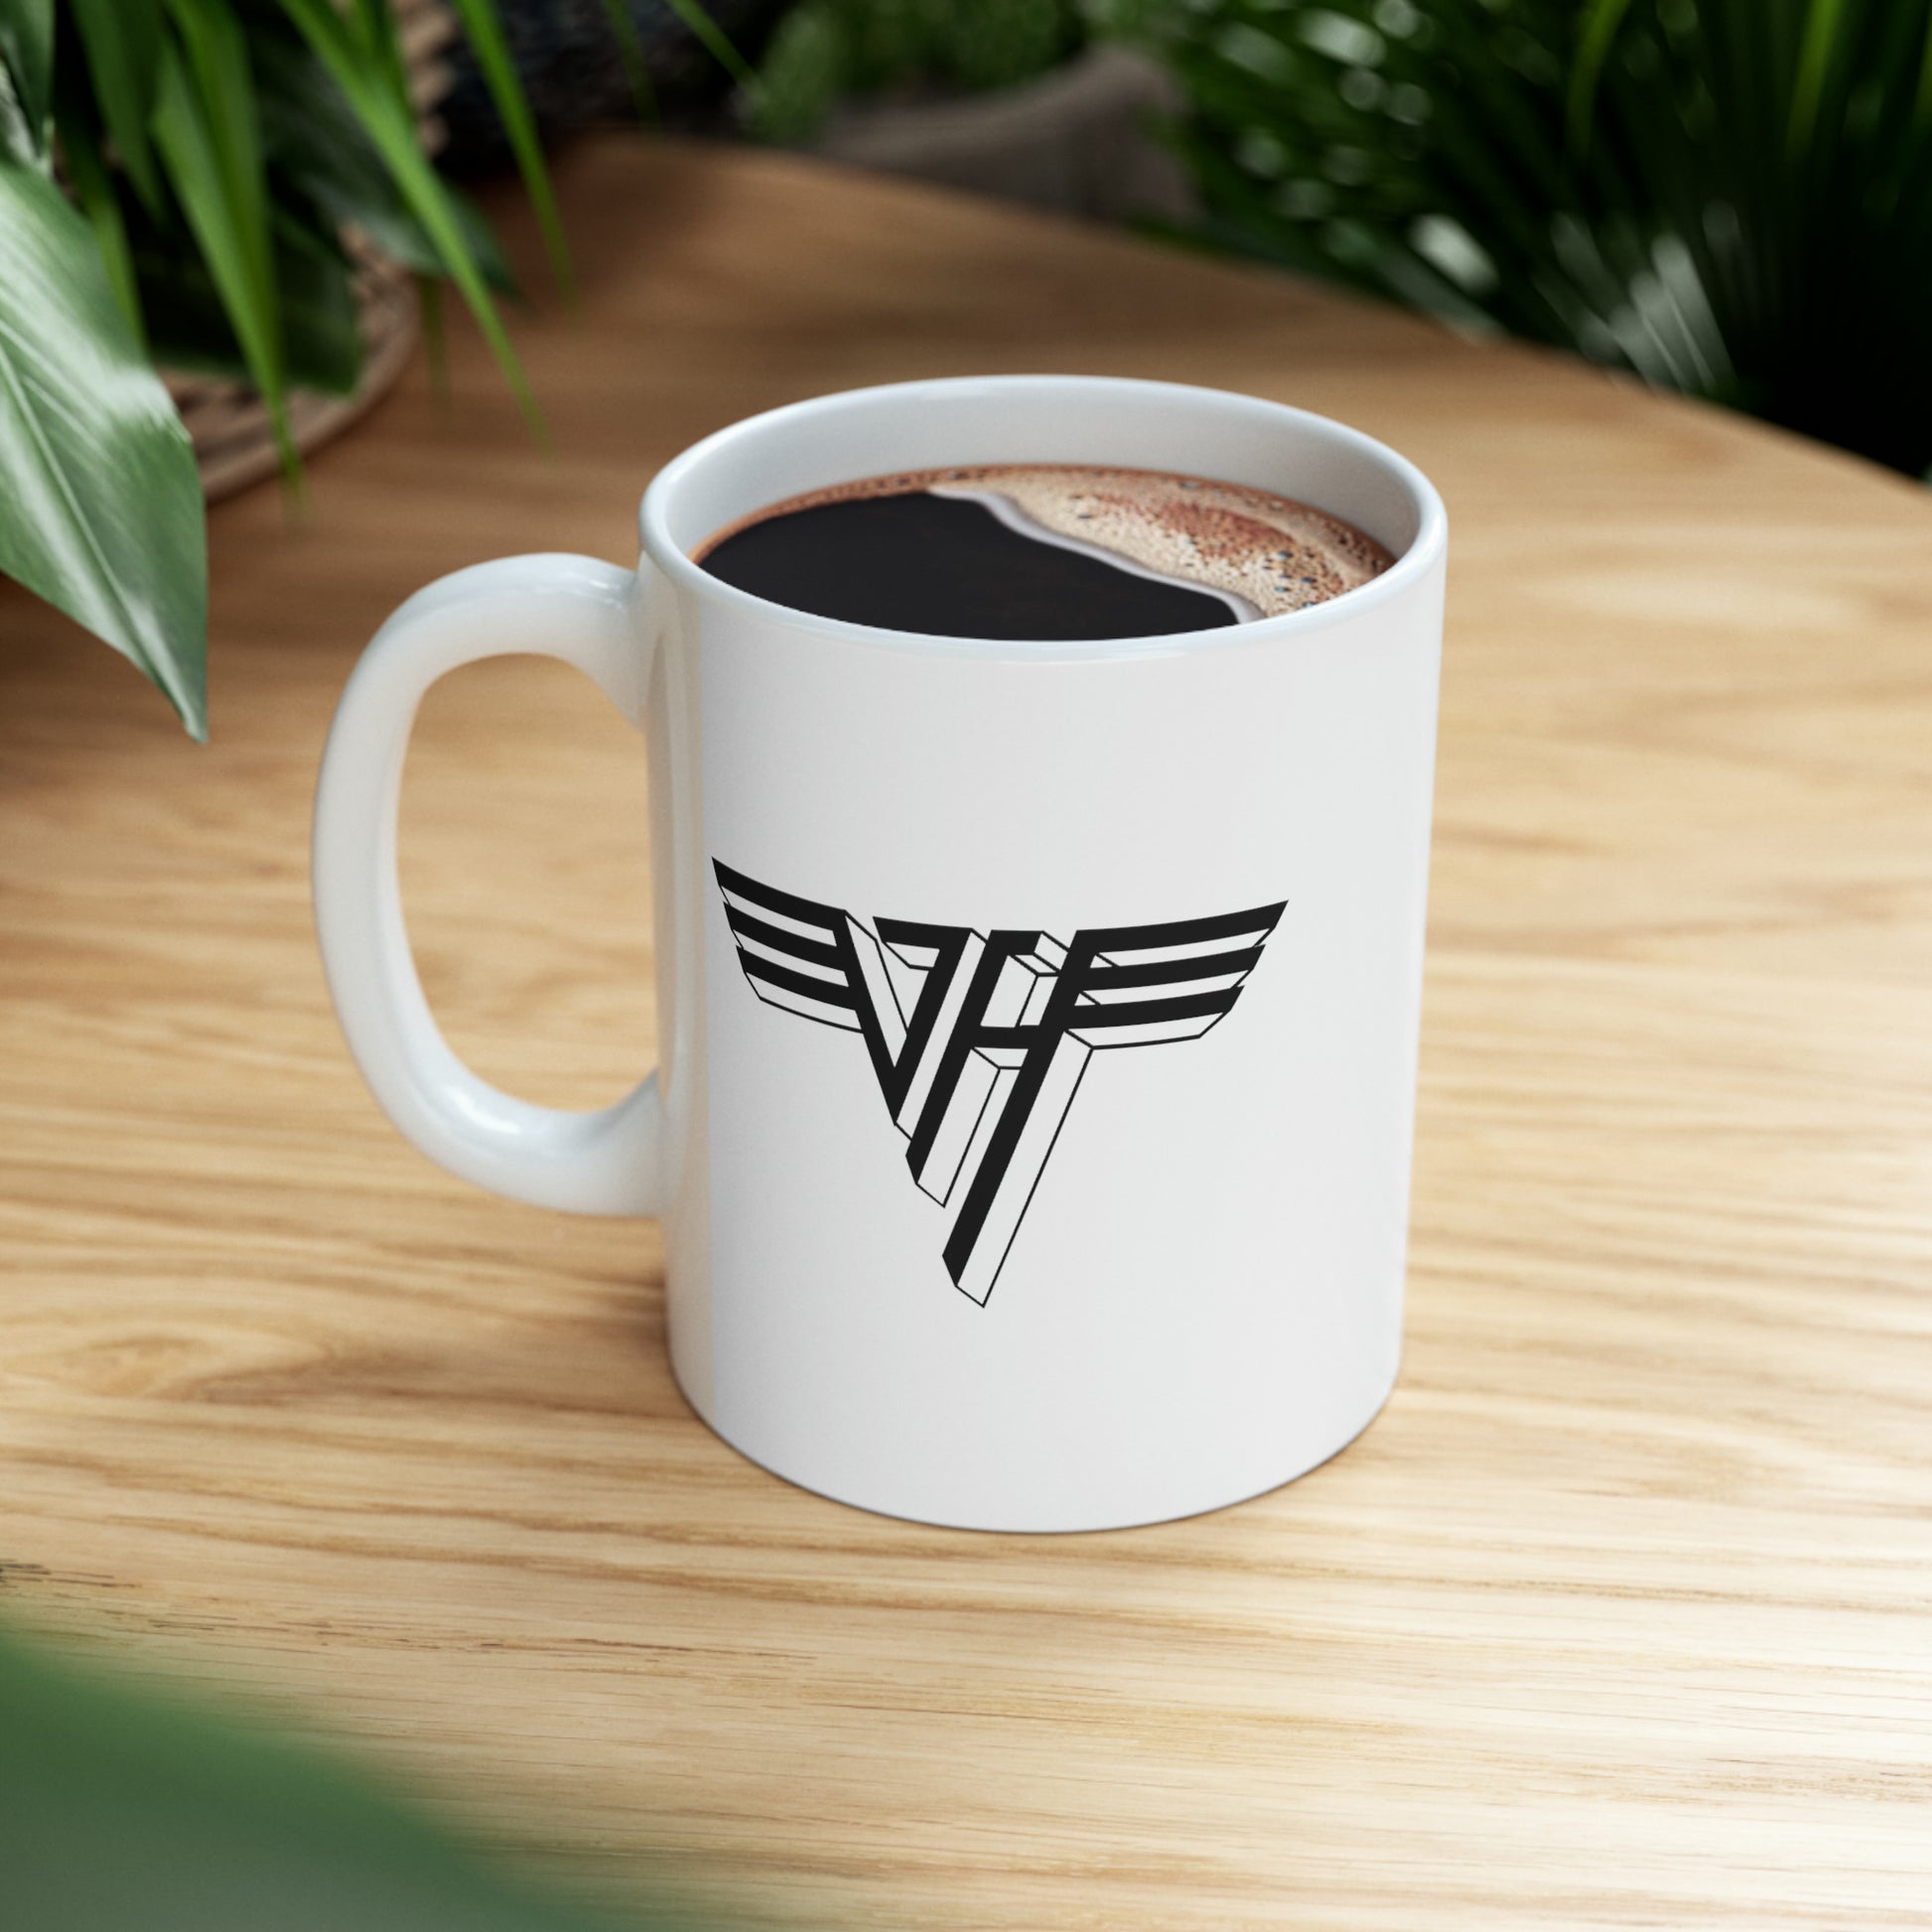 Van Halen Coffee Mug - Double Sided White Ceramic 11oz by TheGlassyLass.com